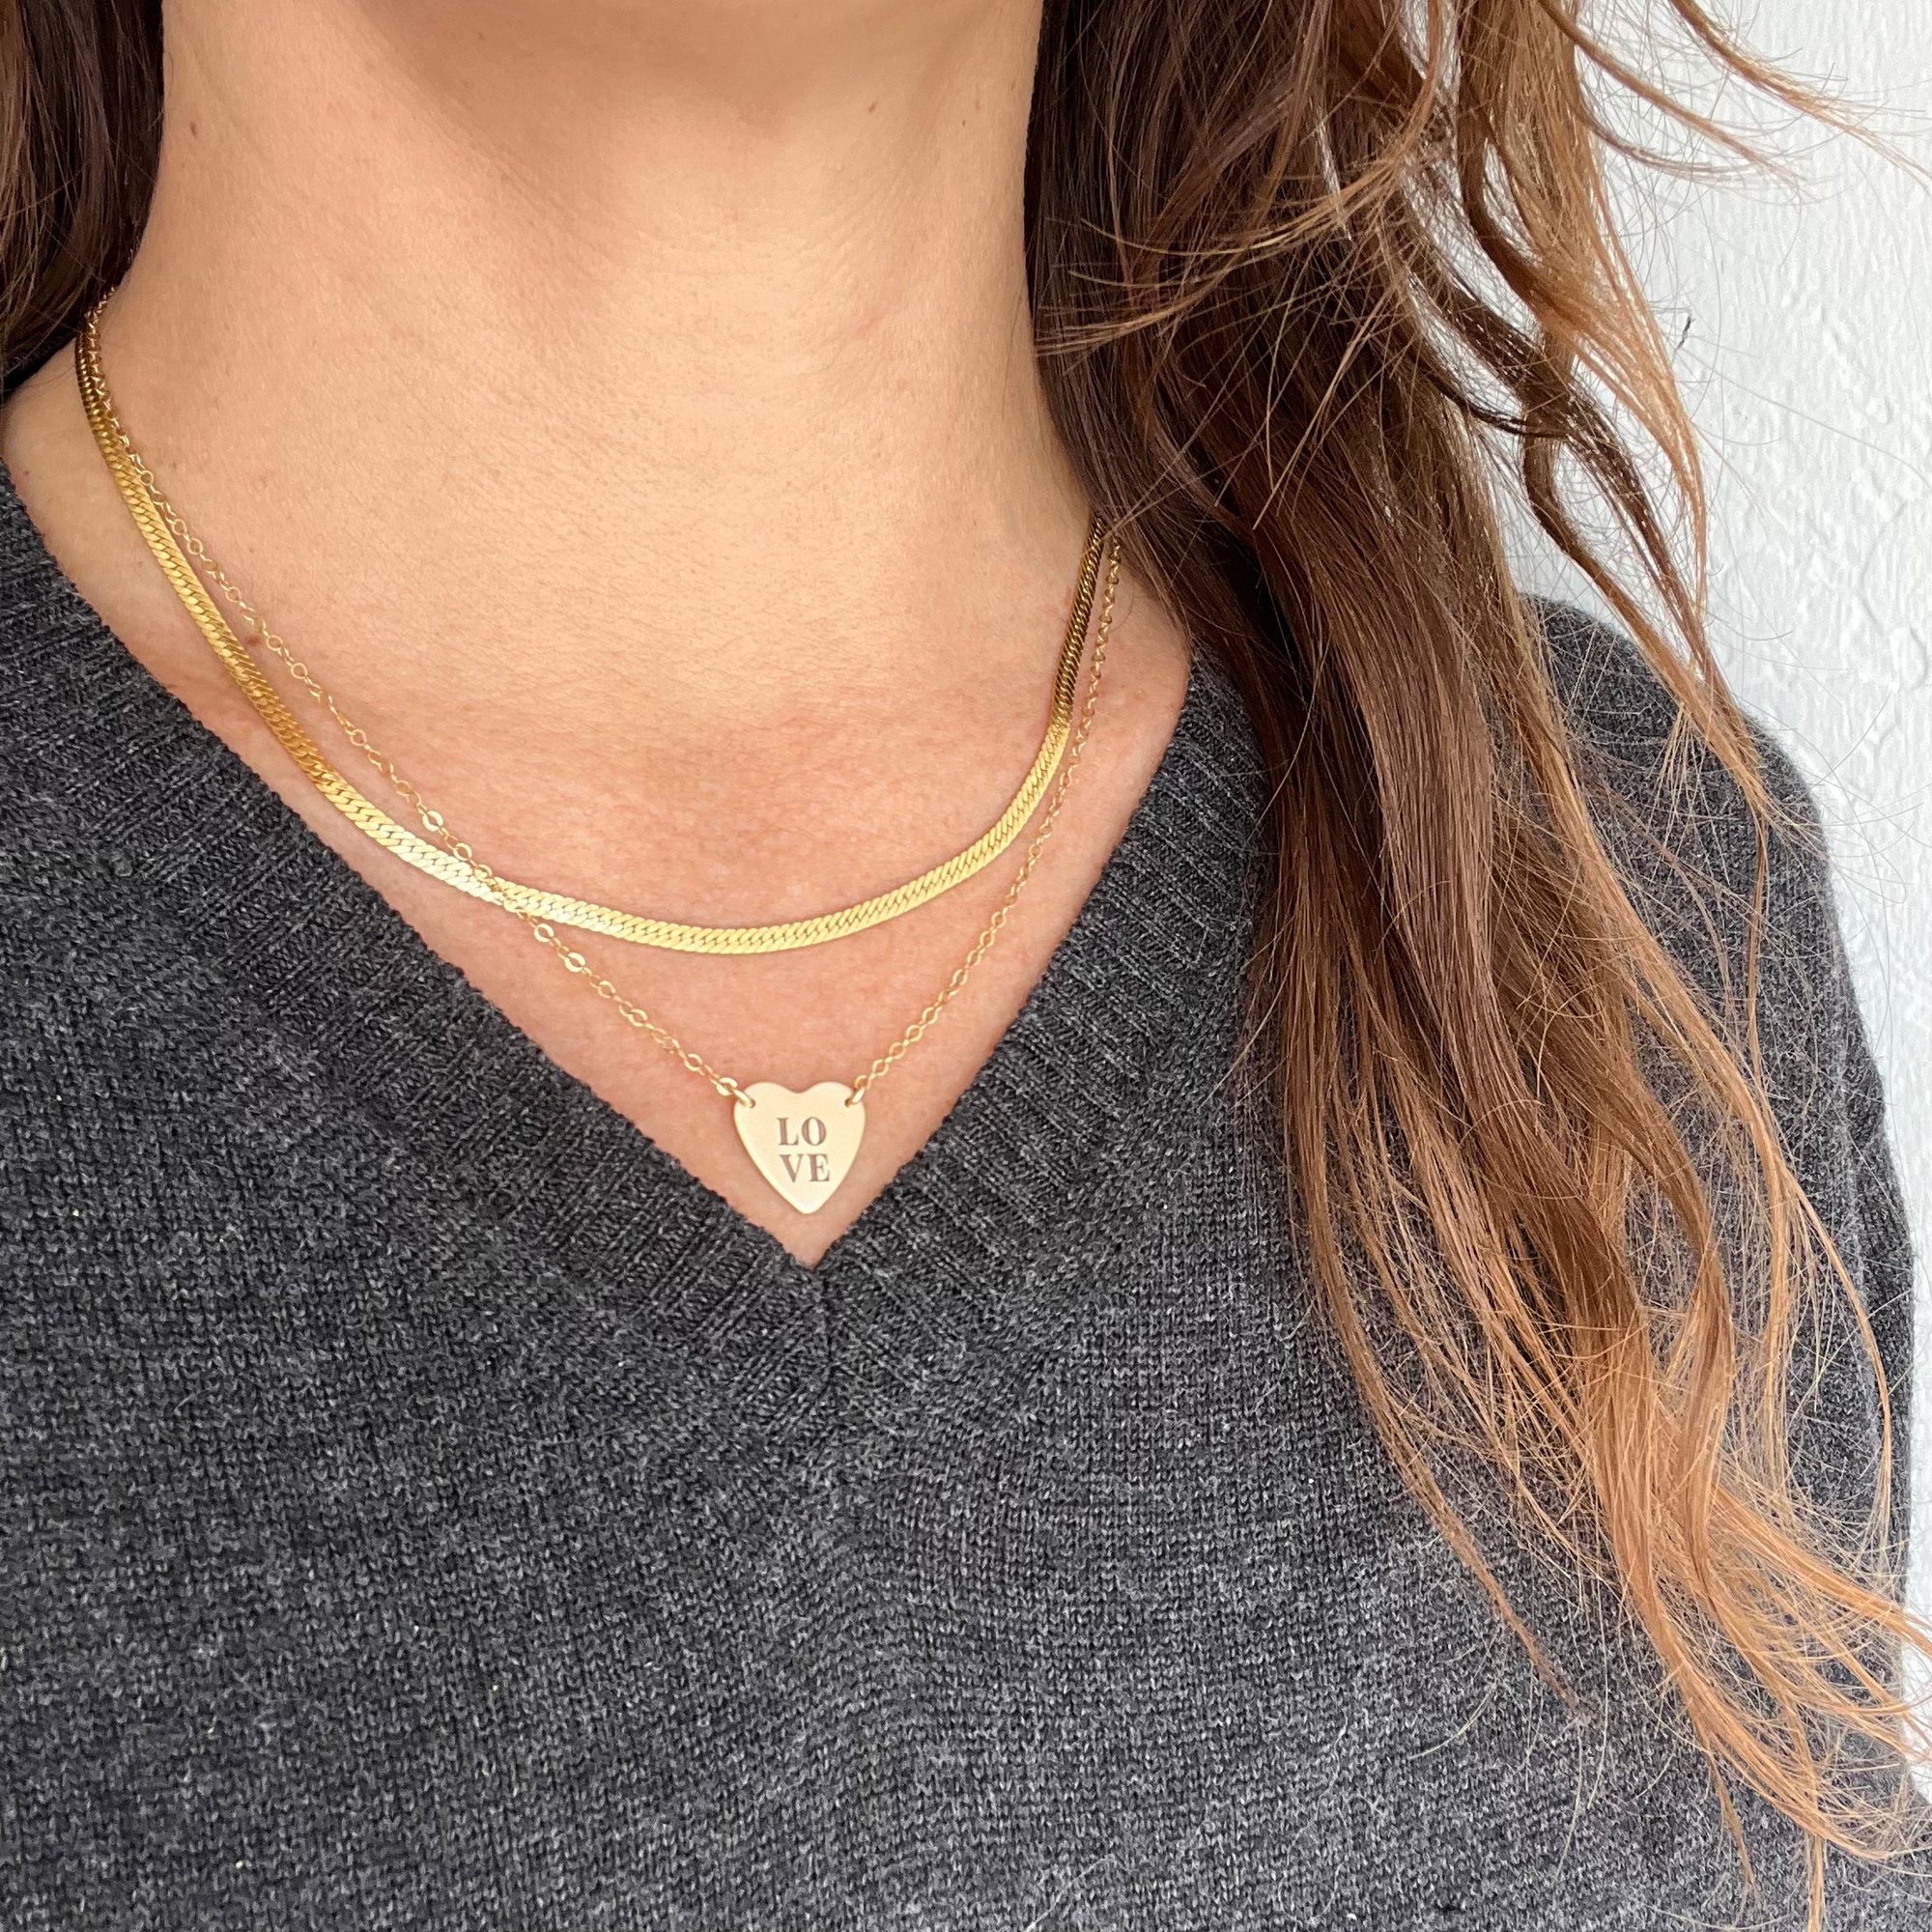 Sunburst Heart Charm Necklace on Leather Cord – Layla G Jewelry